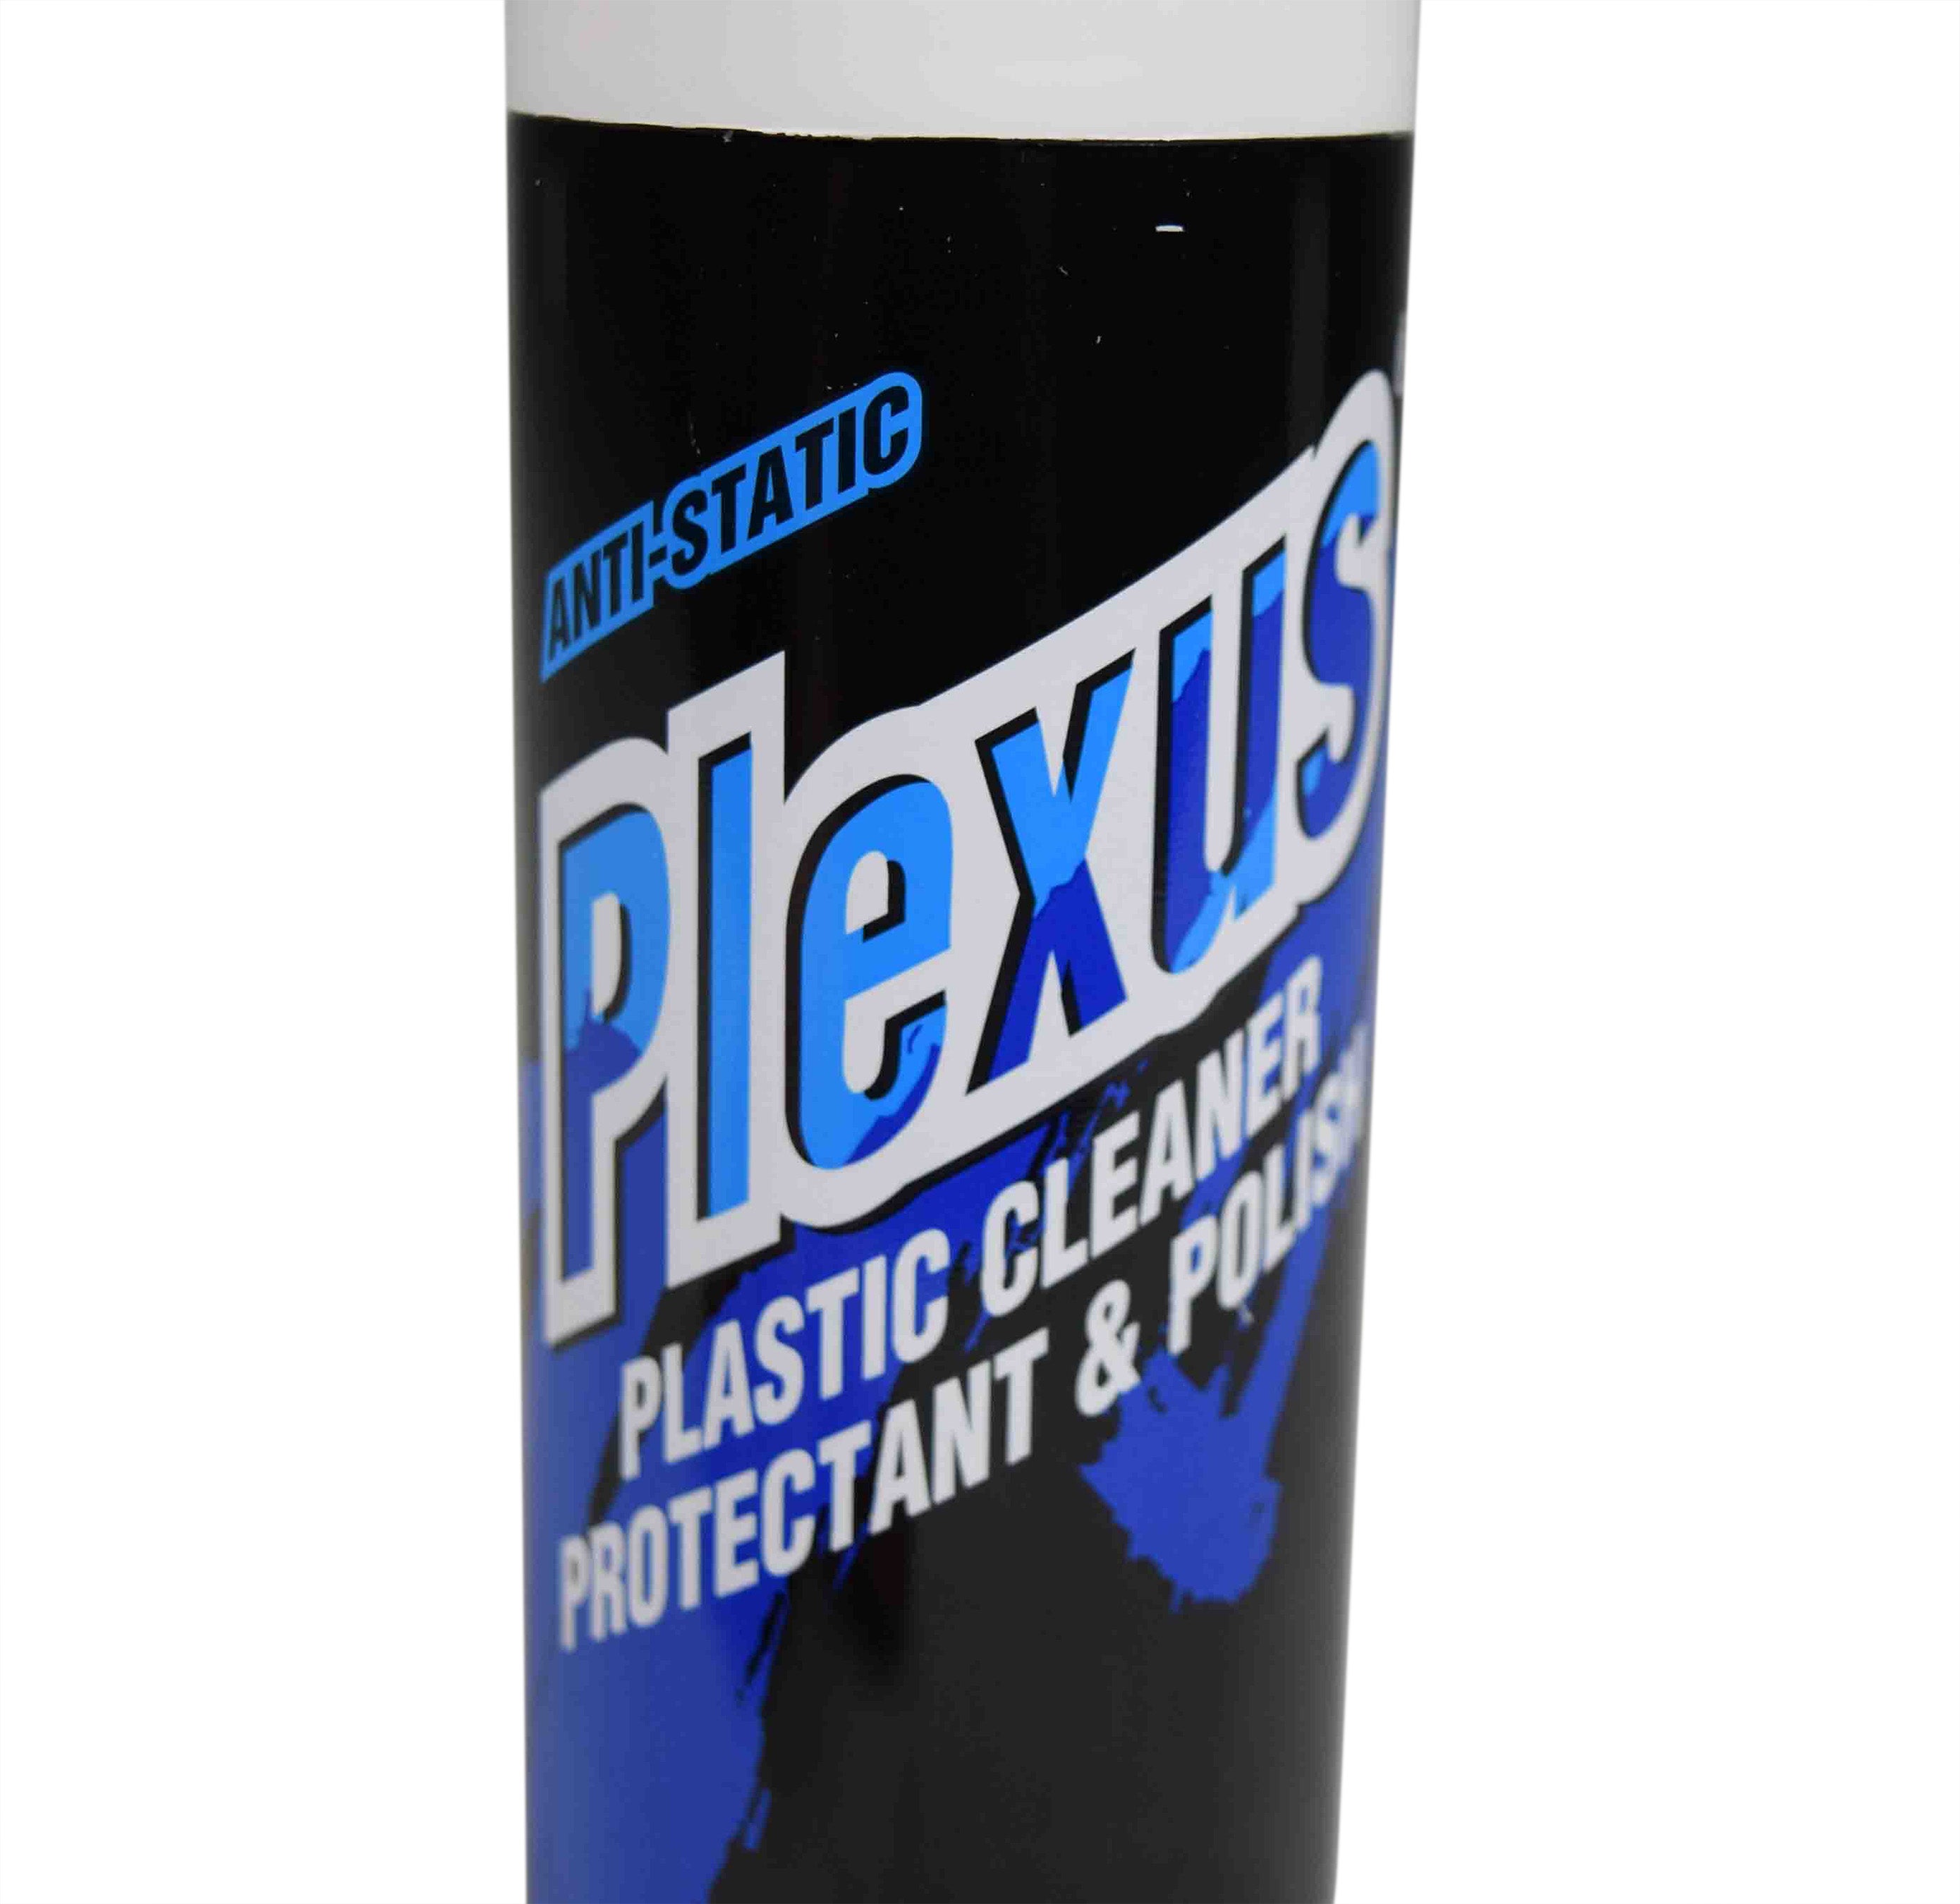 Plexus-Plastic-Cleaner-and-Protectant-20207-7-oz-image-2